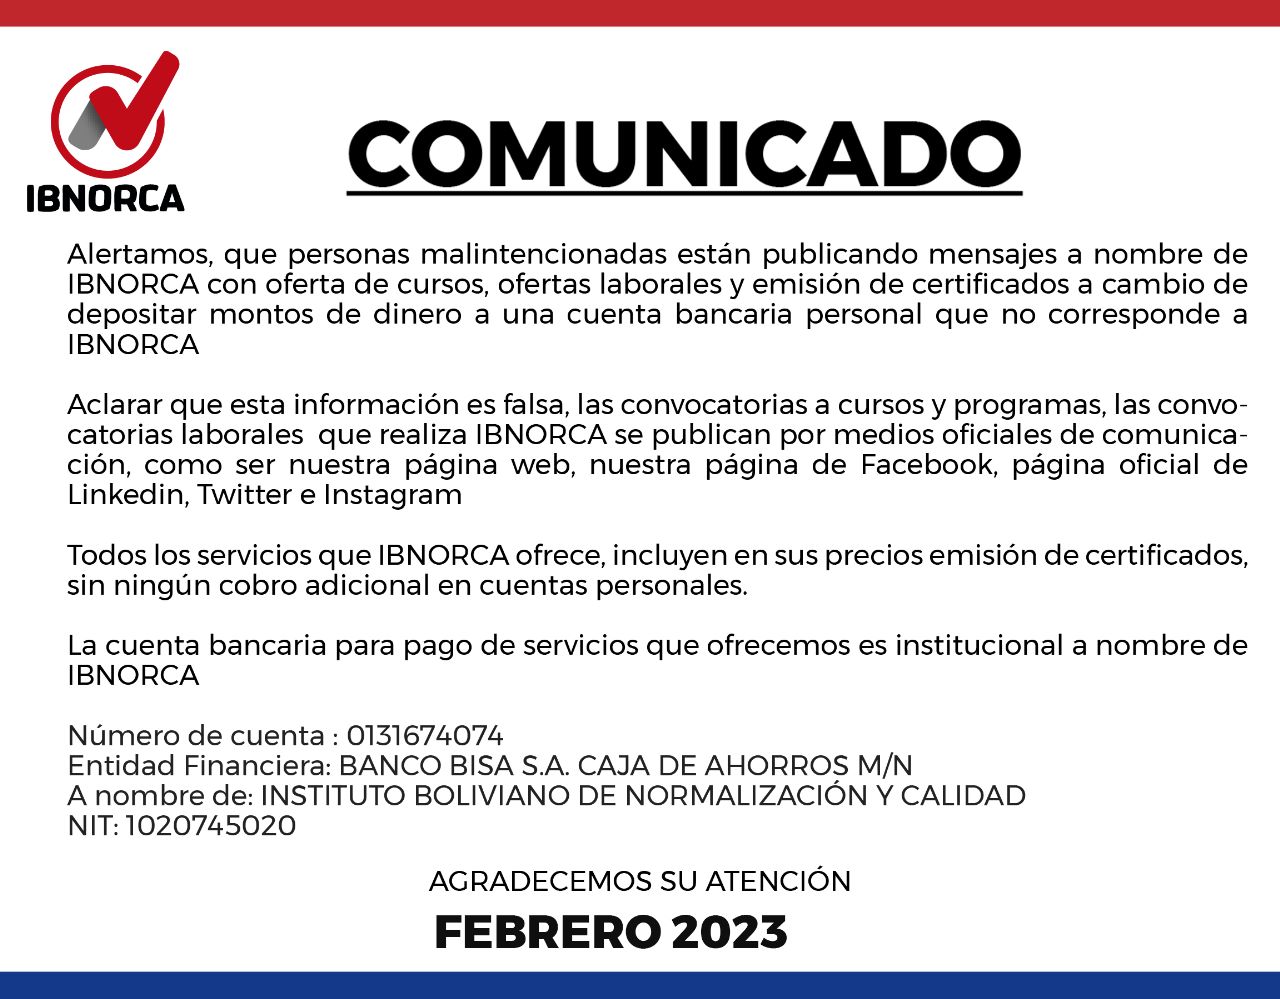 Comunicado IBNORCA Febrero 2023